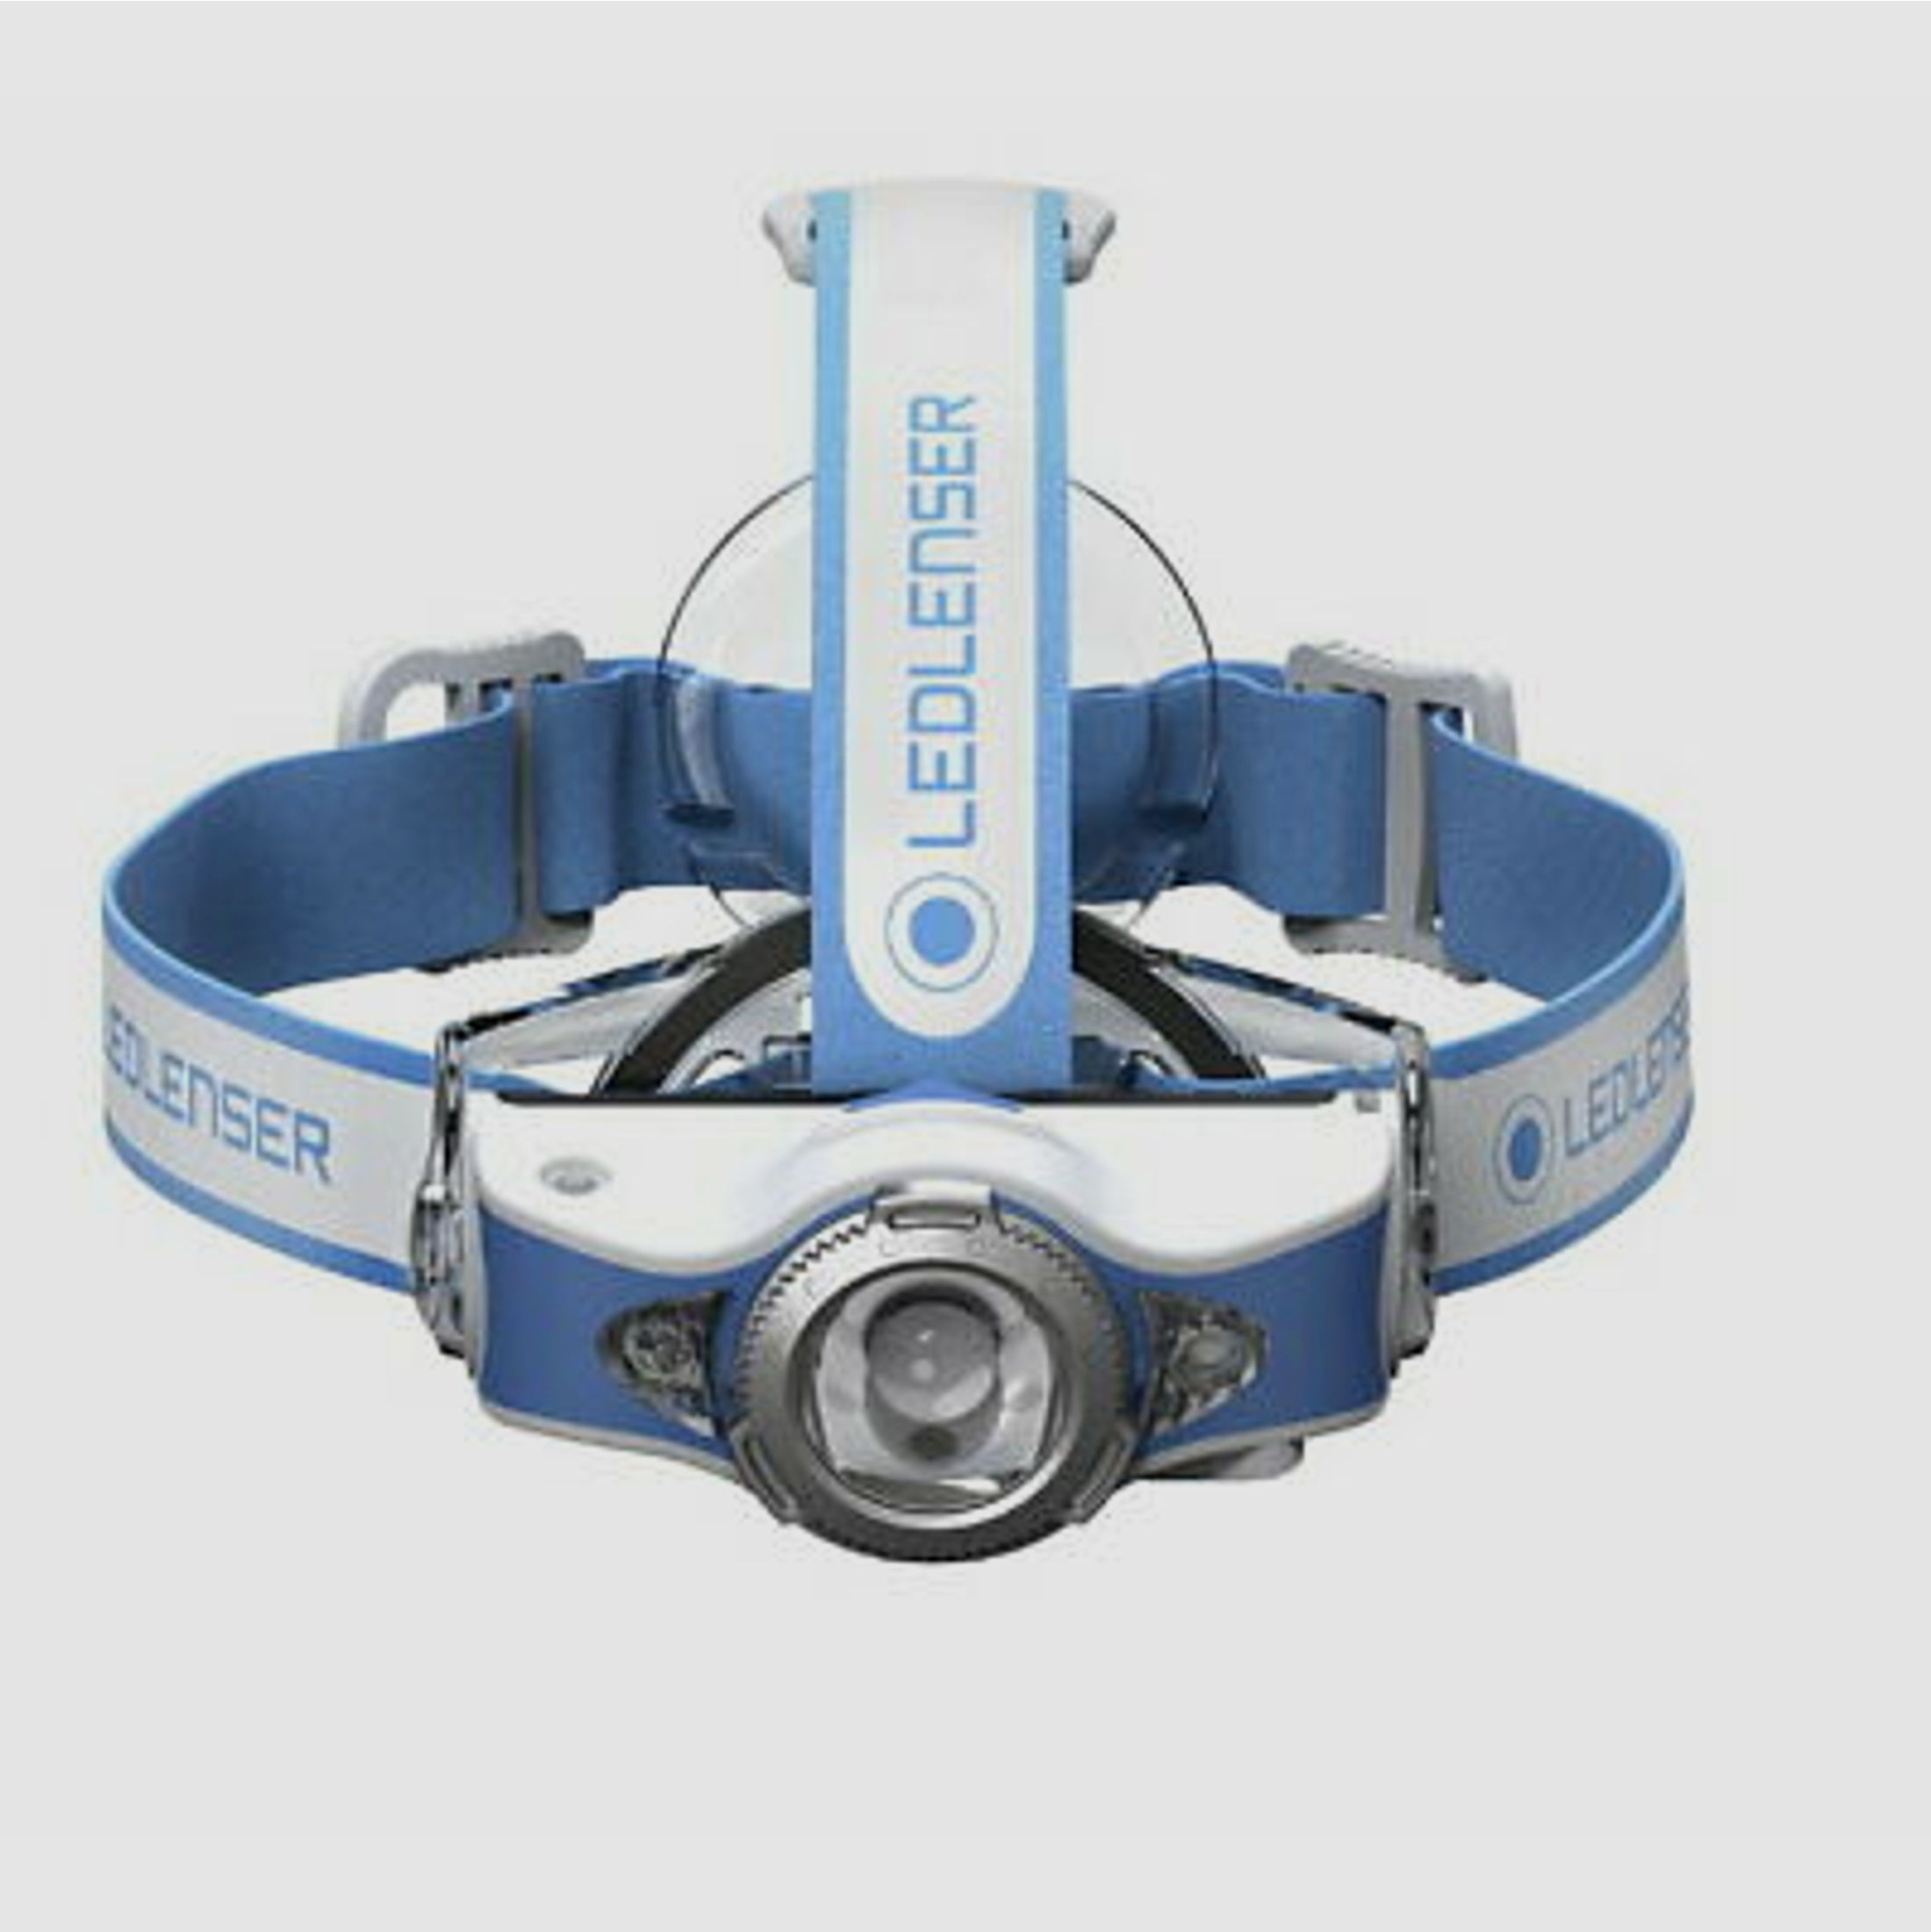 Ledlenser MH11 blau weiß 500997 LED Kopflampe Stirnlampe 1000 Lumen Bluetooth